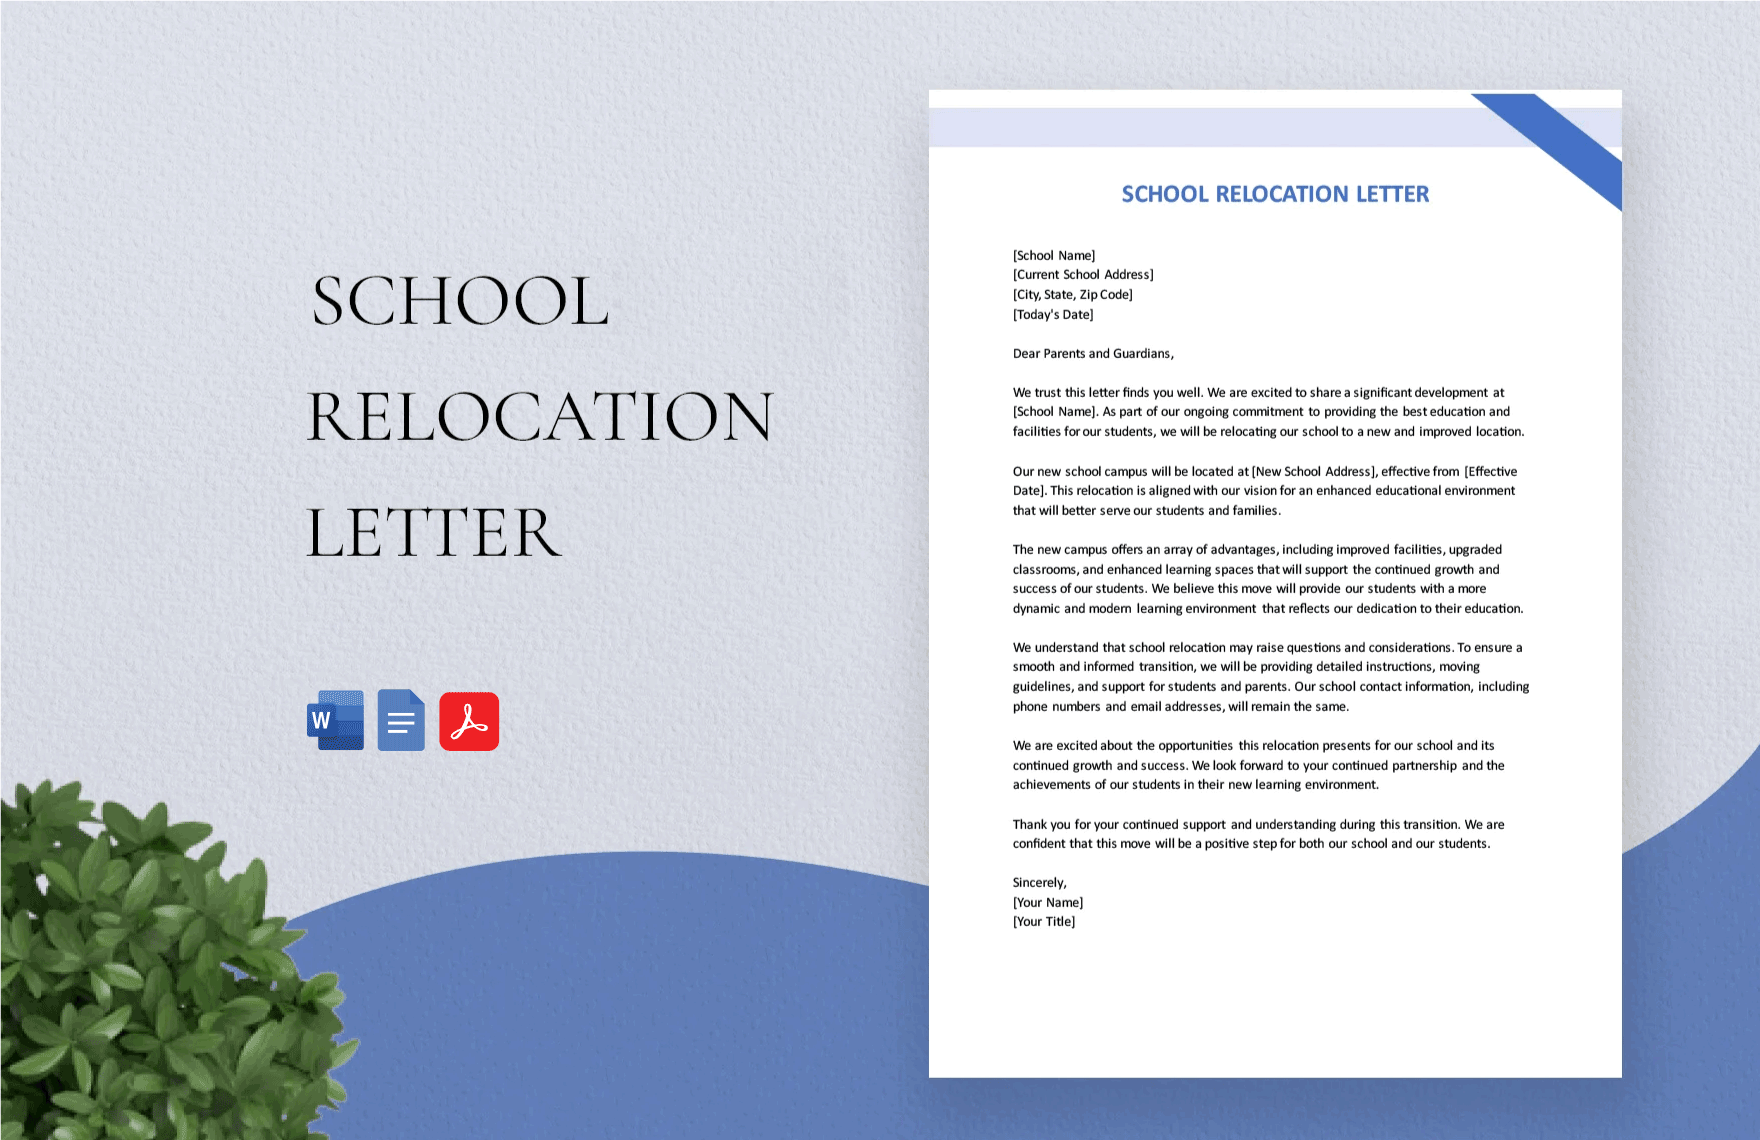 School Relocation Letter in Word, Google Docs, PDF